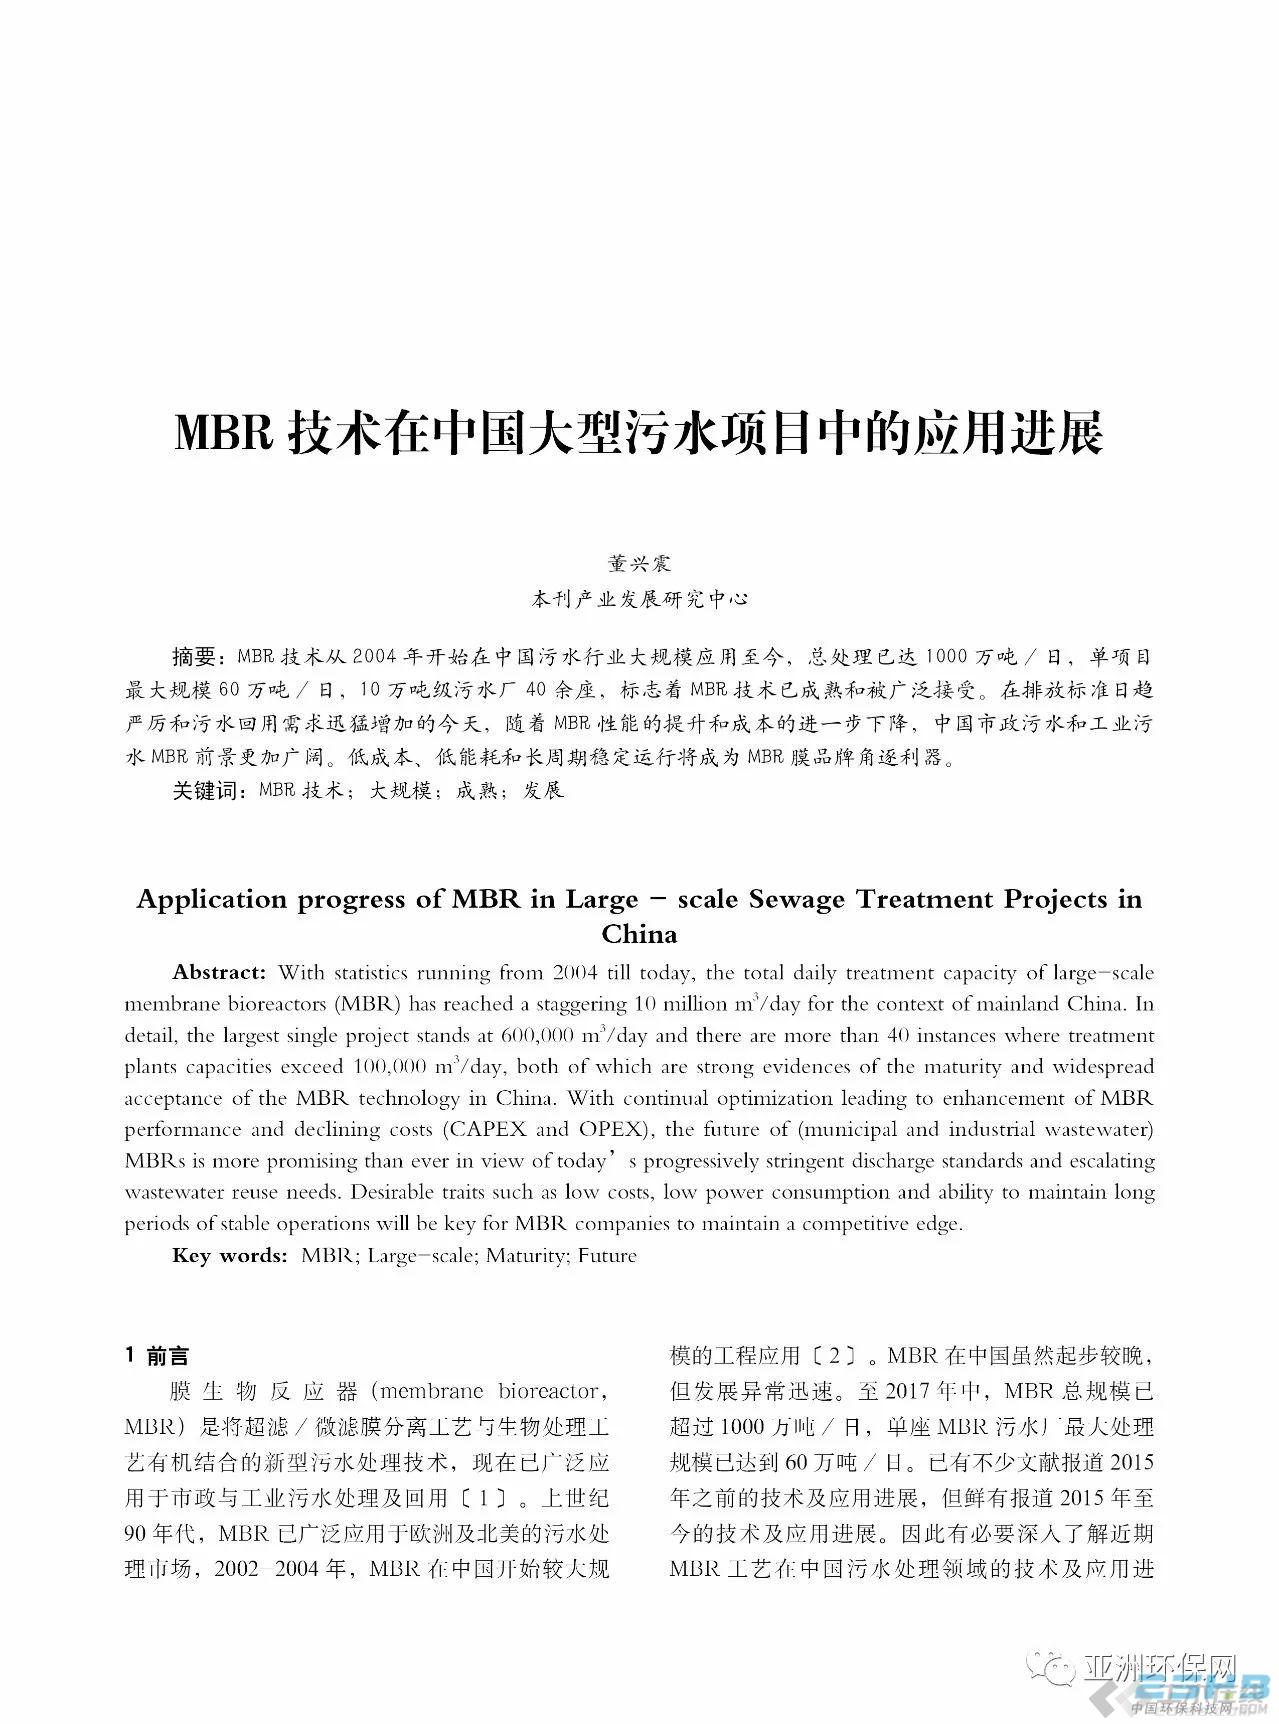 MBR技术在中国大型污水项目中的应用进展1.jpg